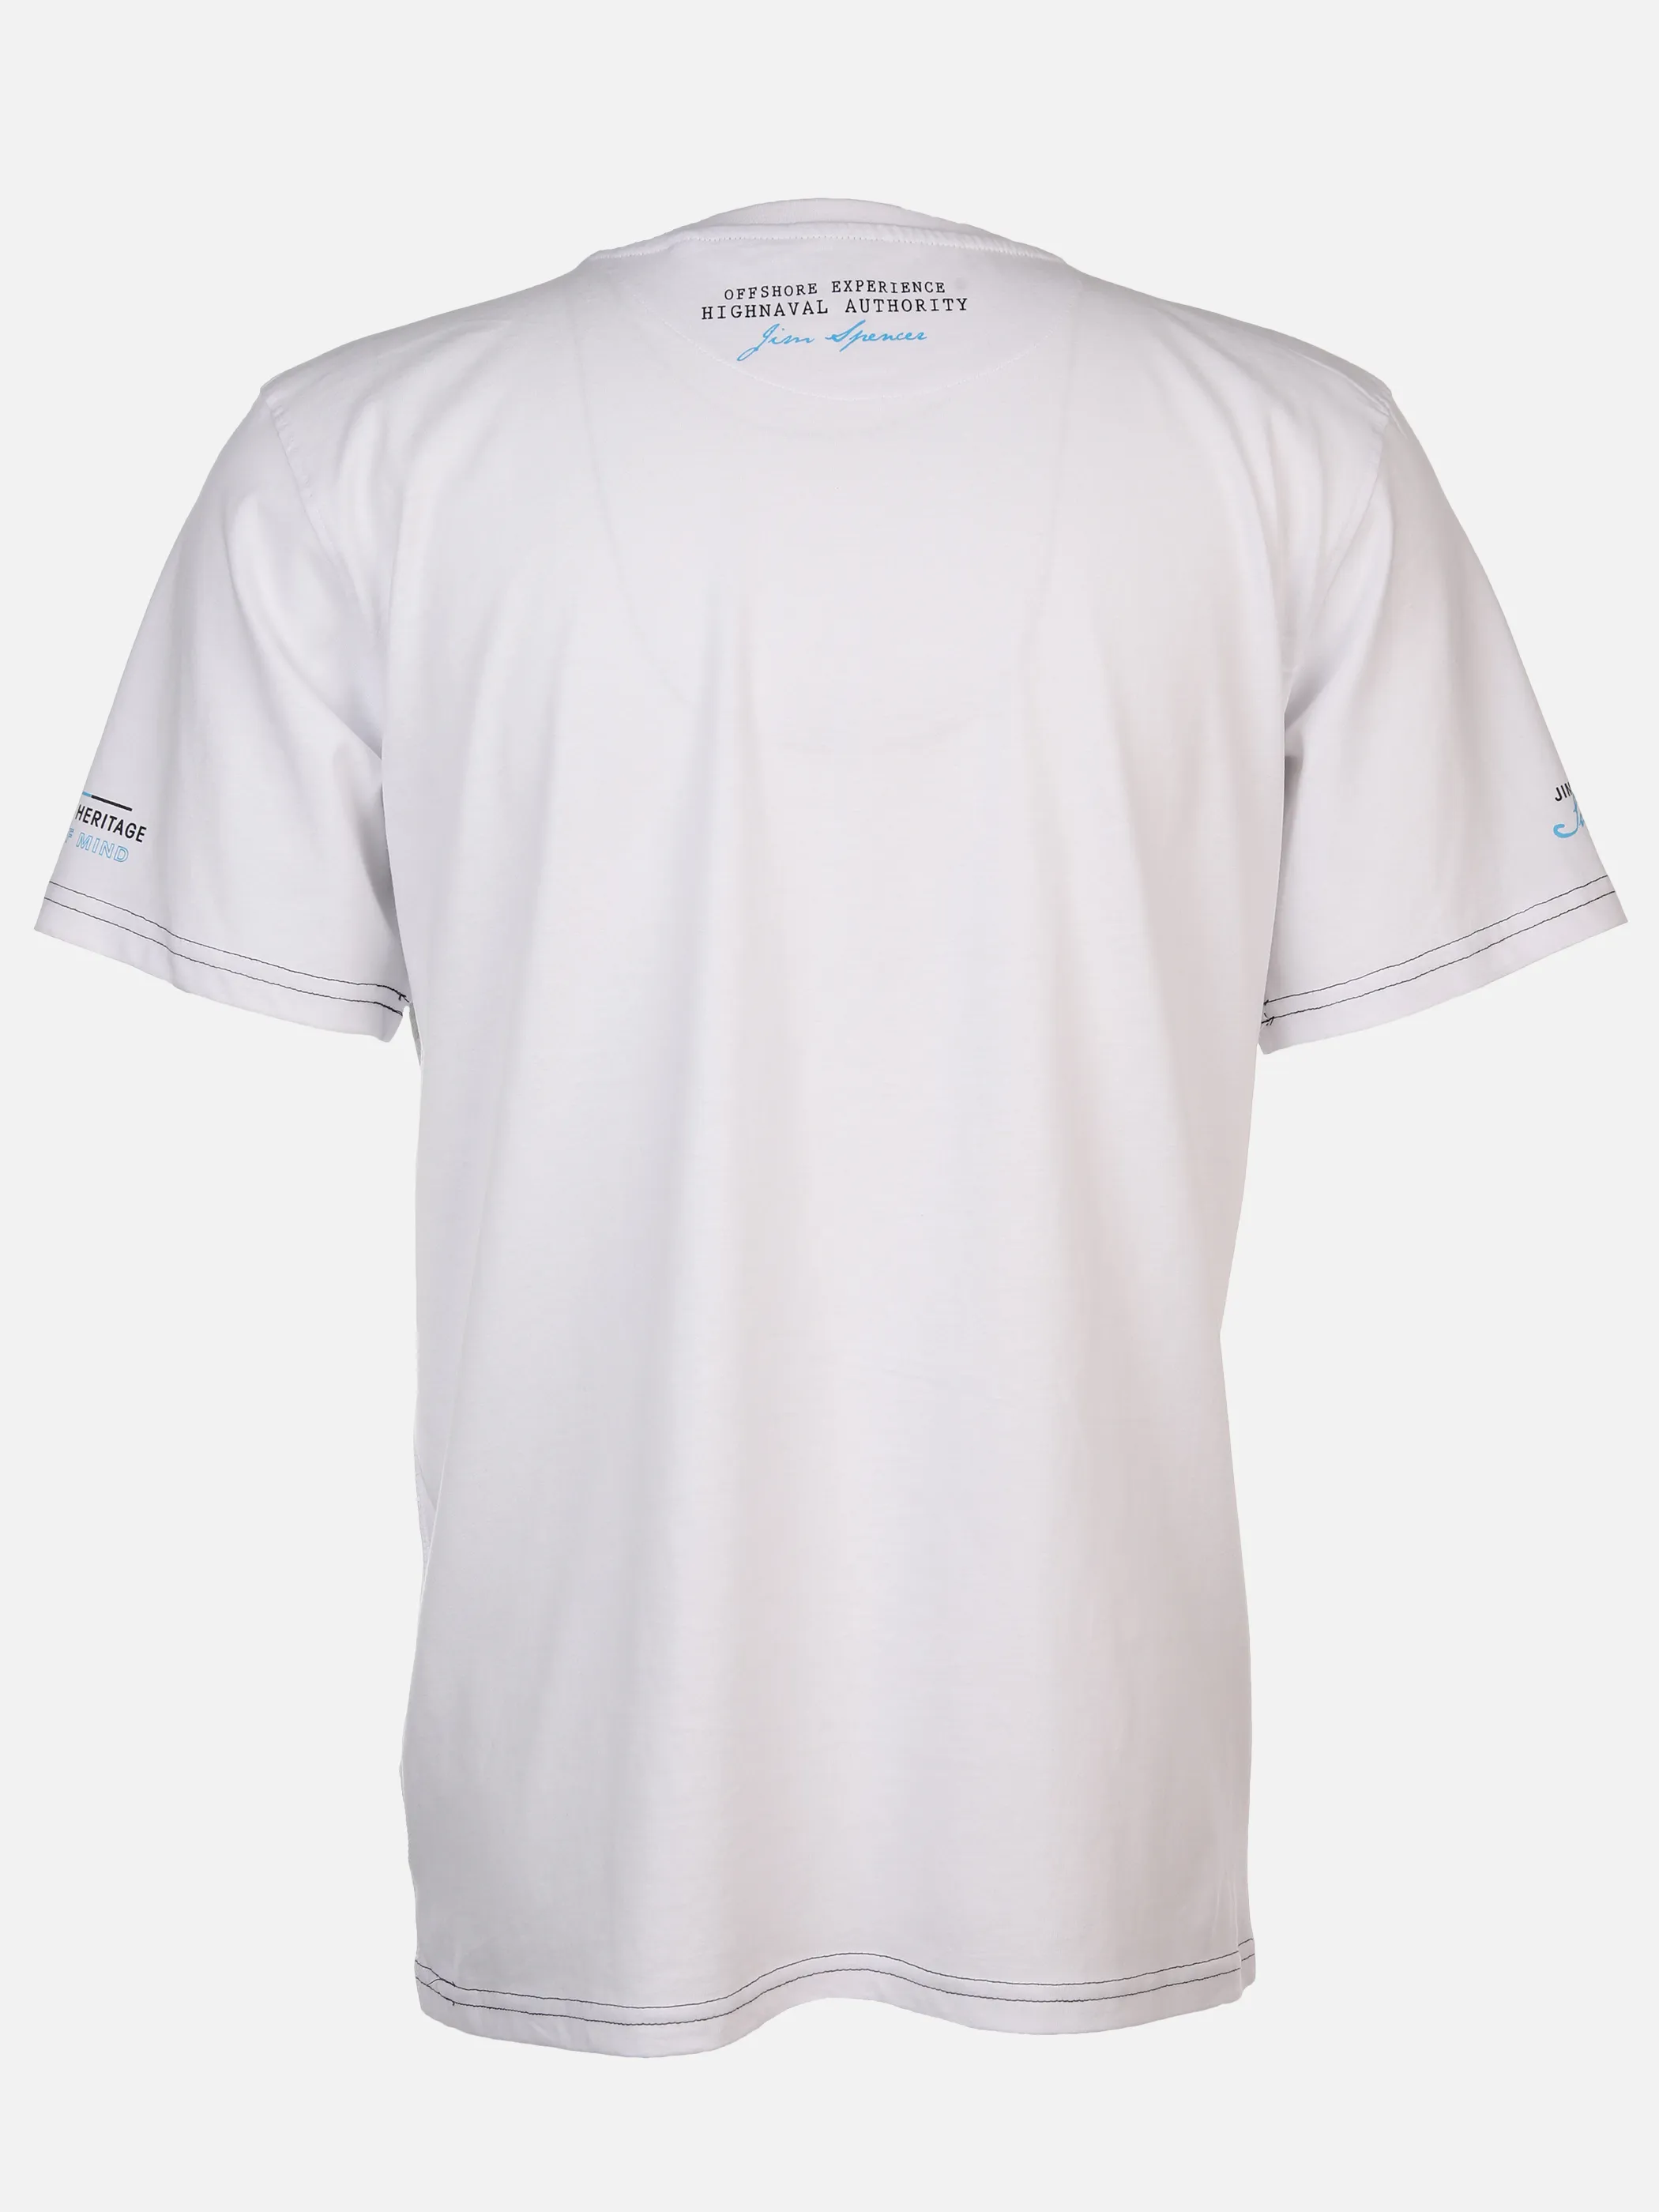 Jim Spencer He. T-Shirt 1/2 Arm Druck Weiß 894402 WHITE 2